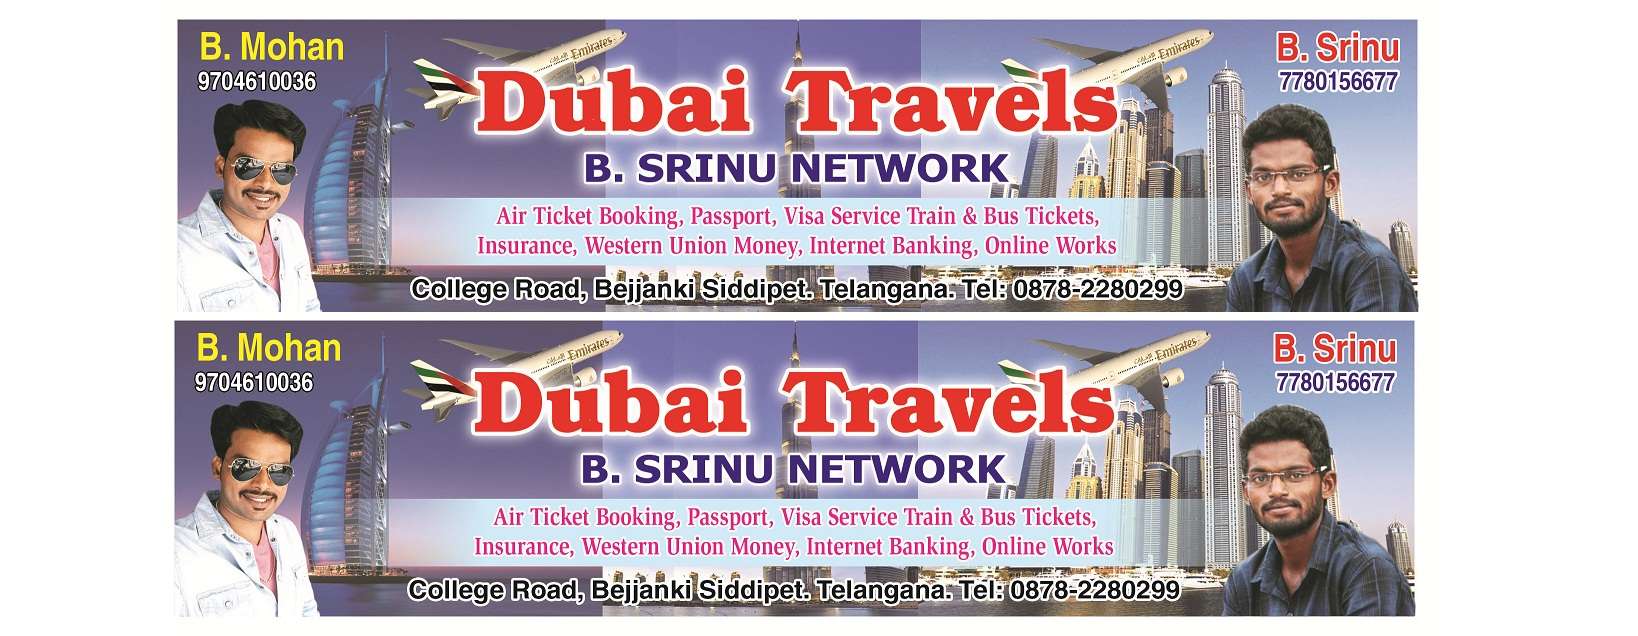 Dubai Travels 